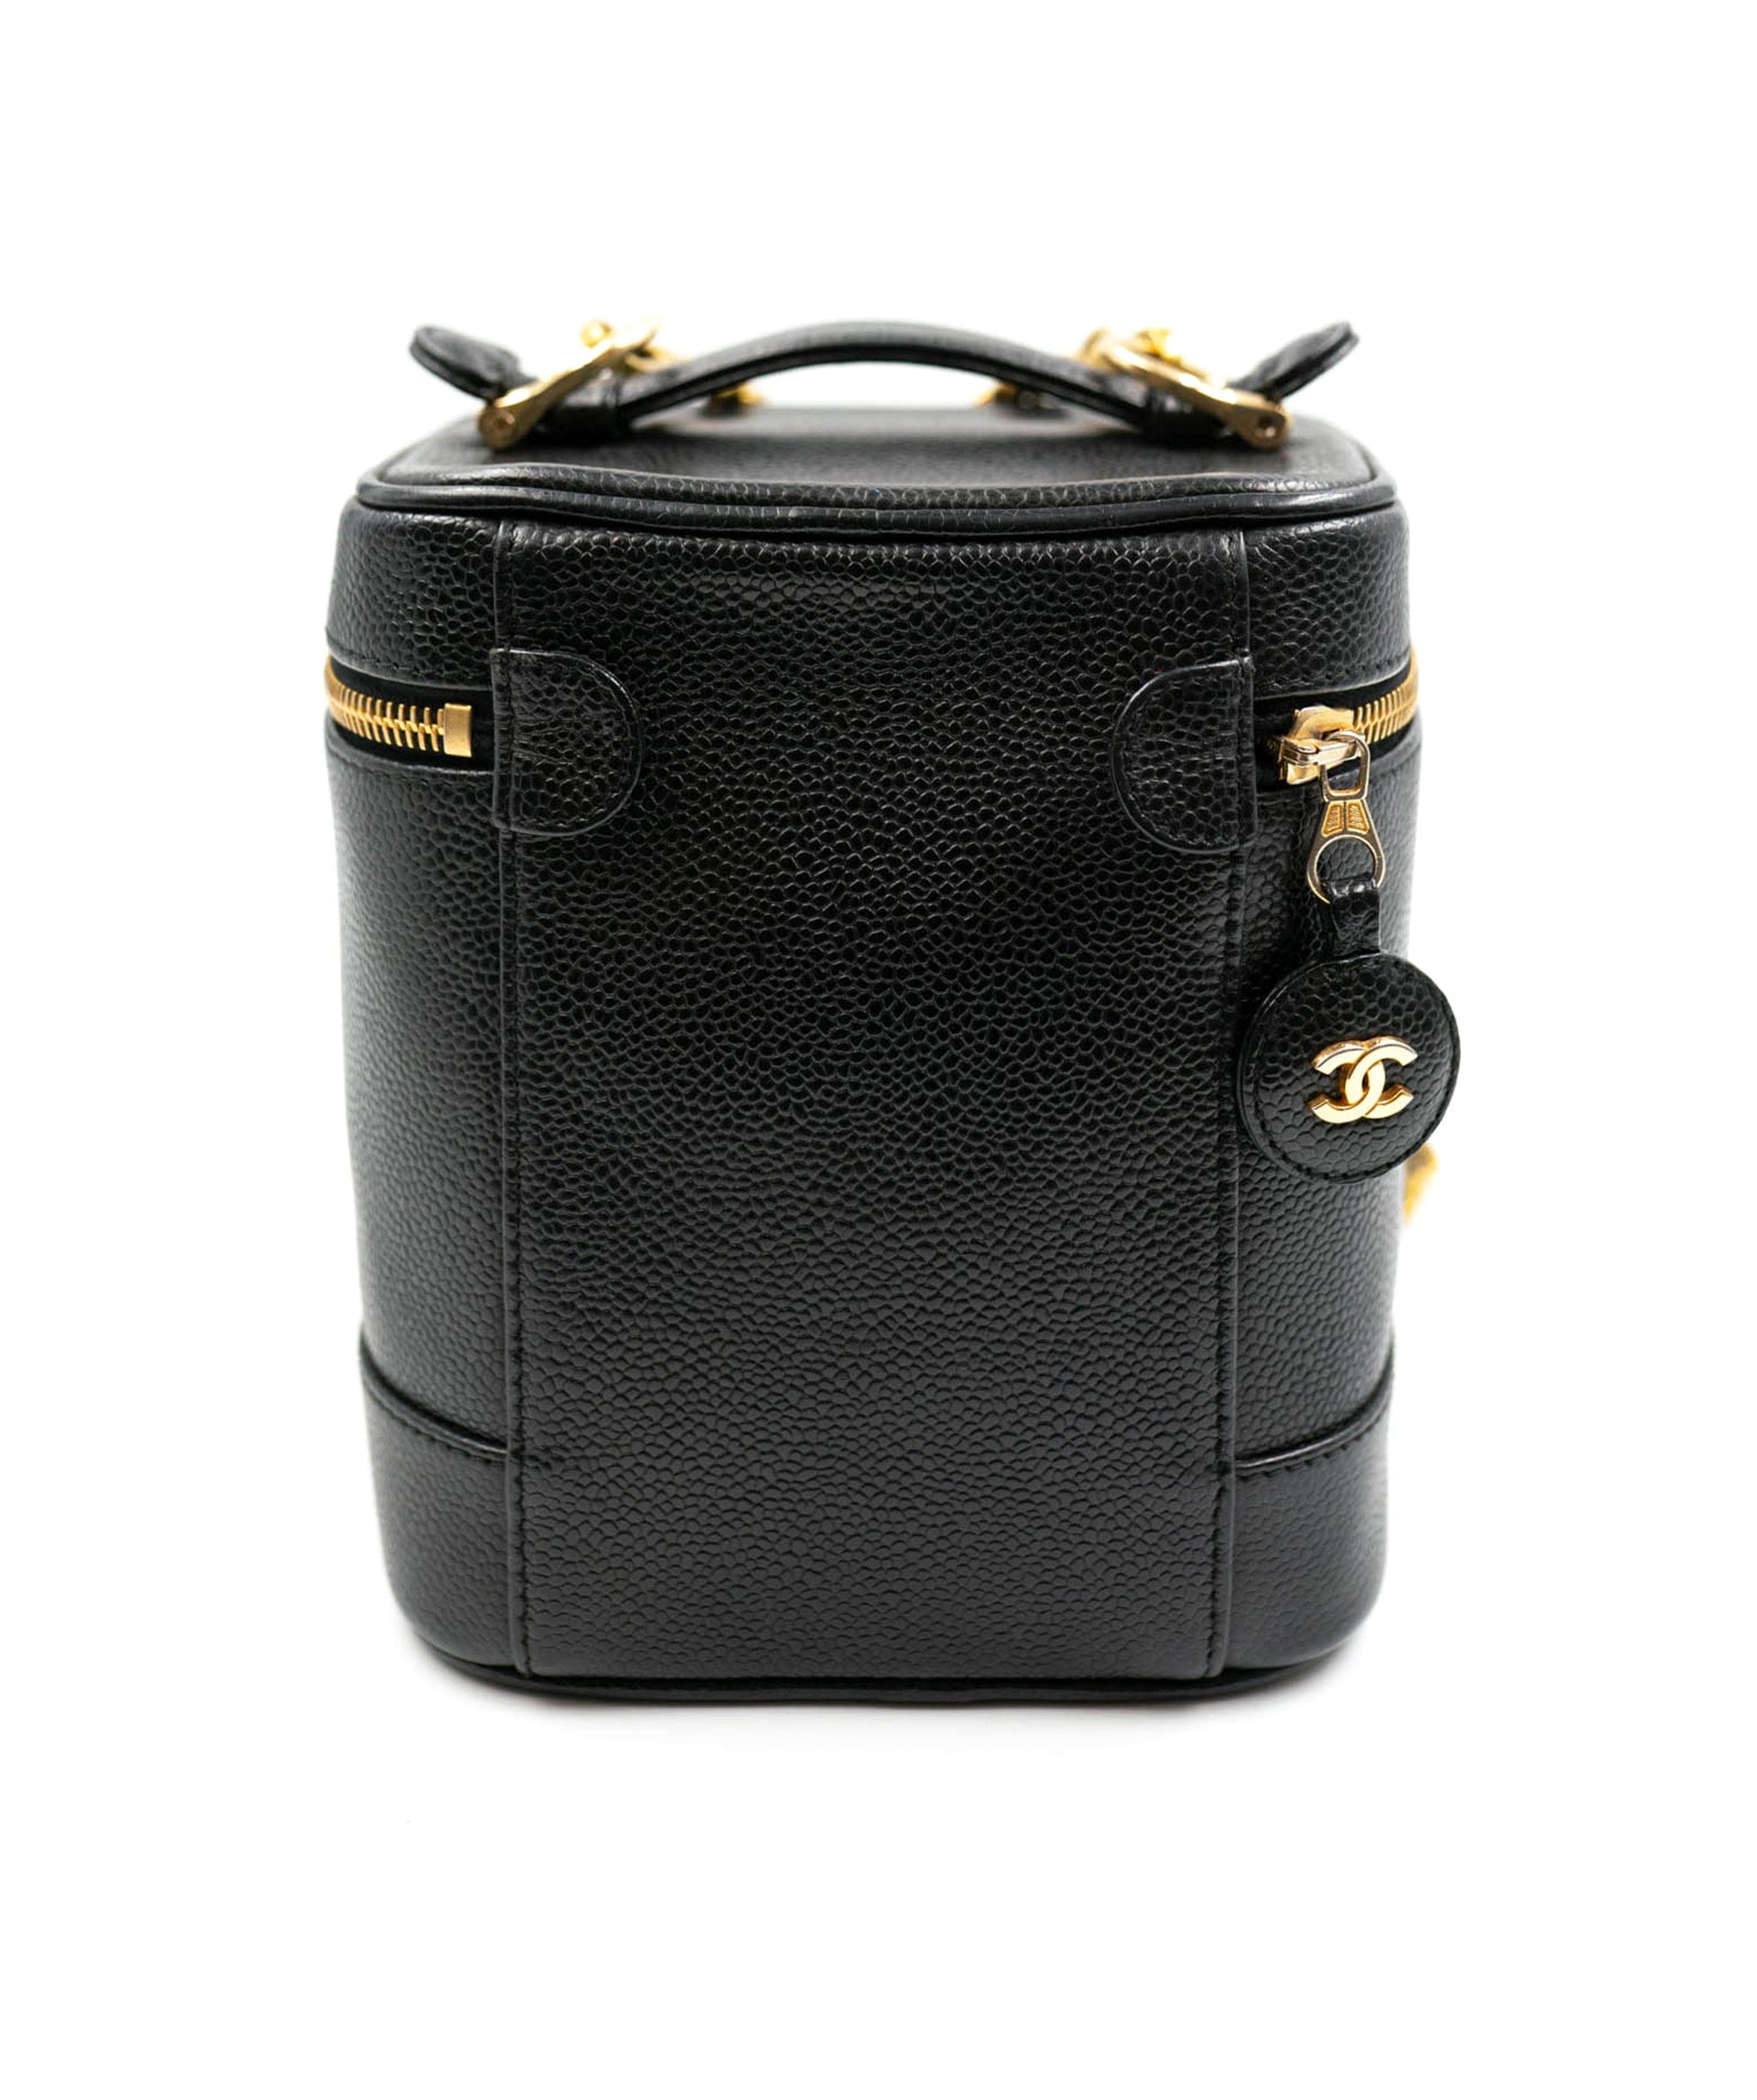 Chanel Chanel VTG Black Vanity Case With GHW SYL1049